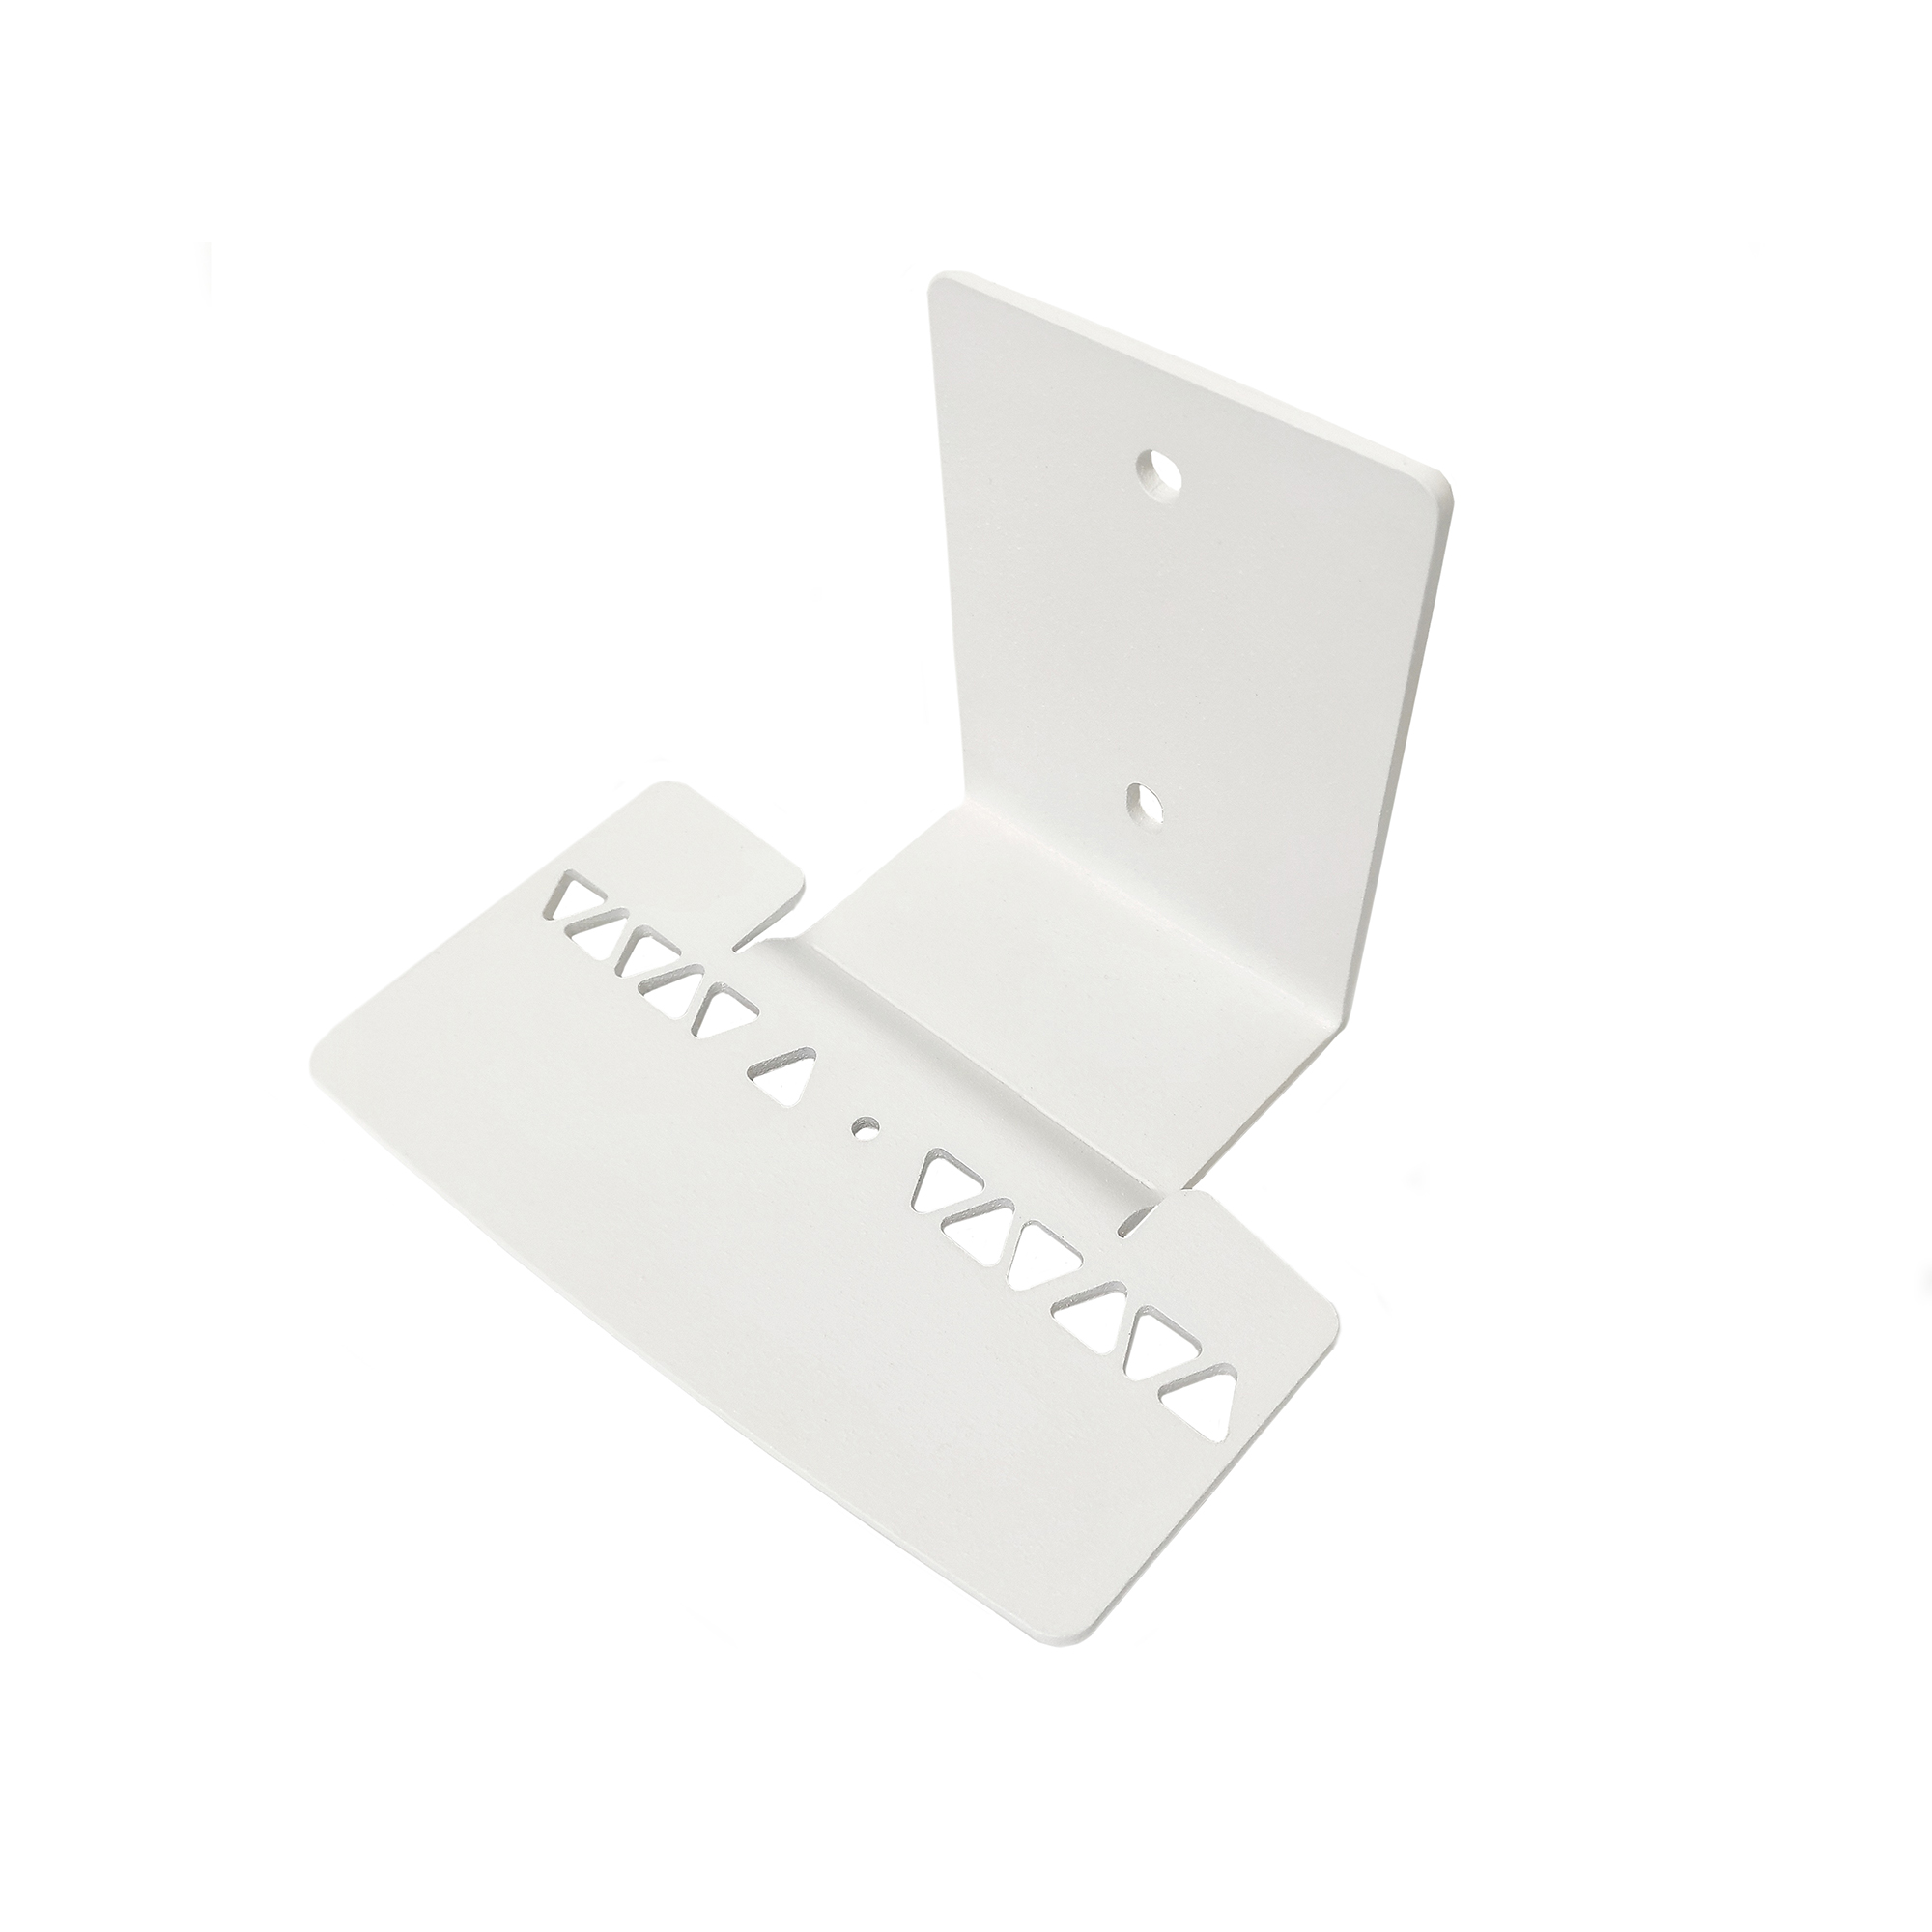 Кронштейн настенный EMBODIMENT для PlayStation5 белый - фото 1